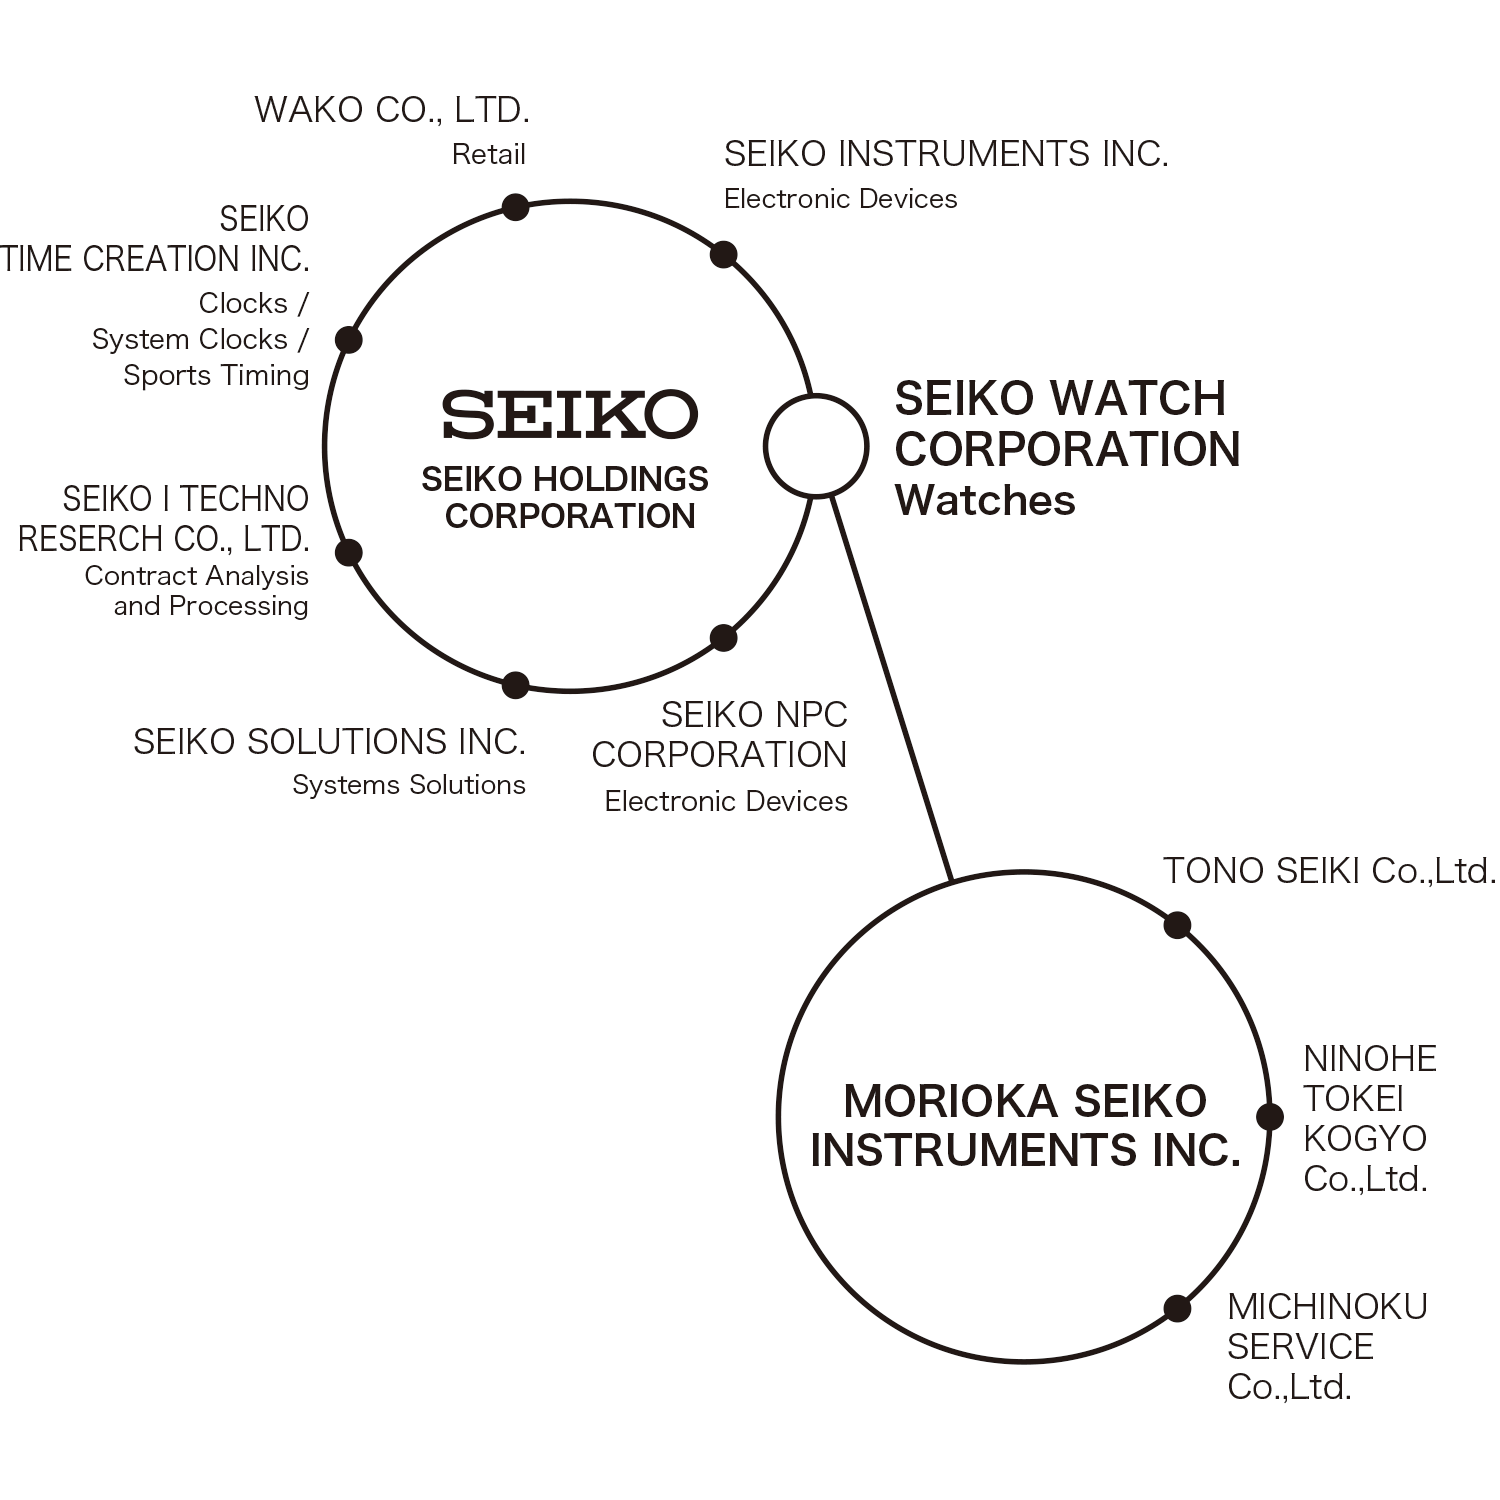 Seiko Holdings Group